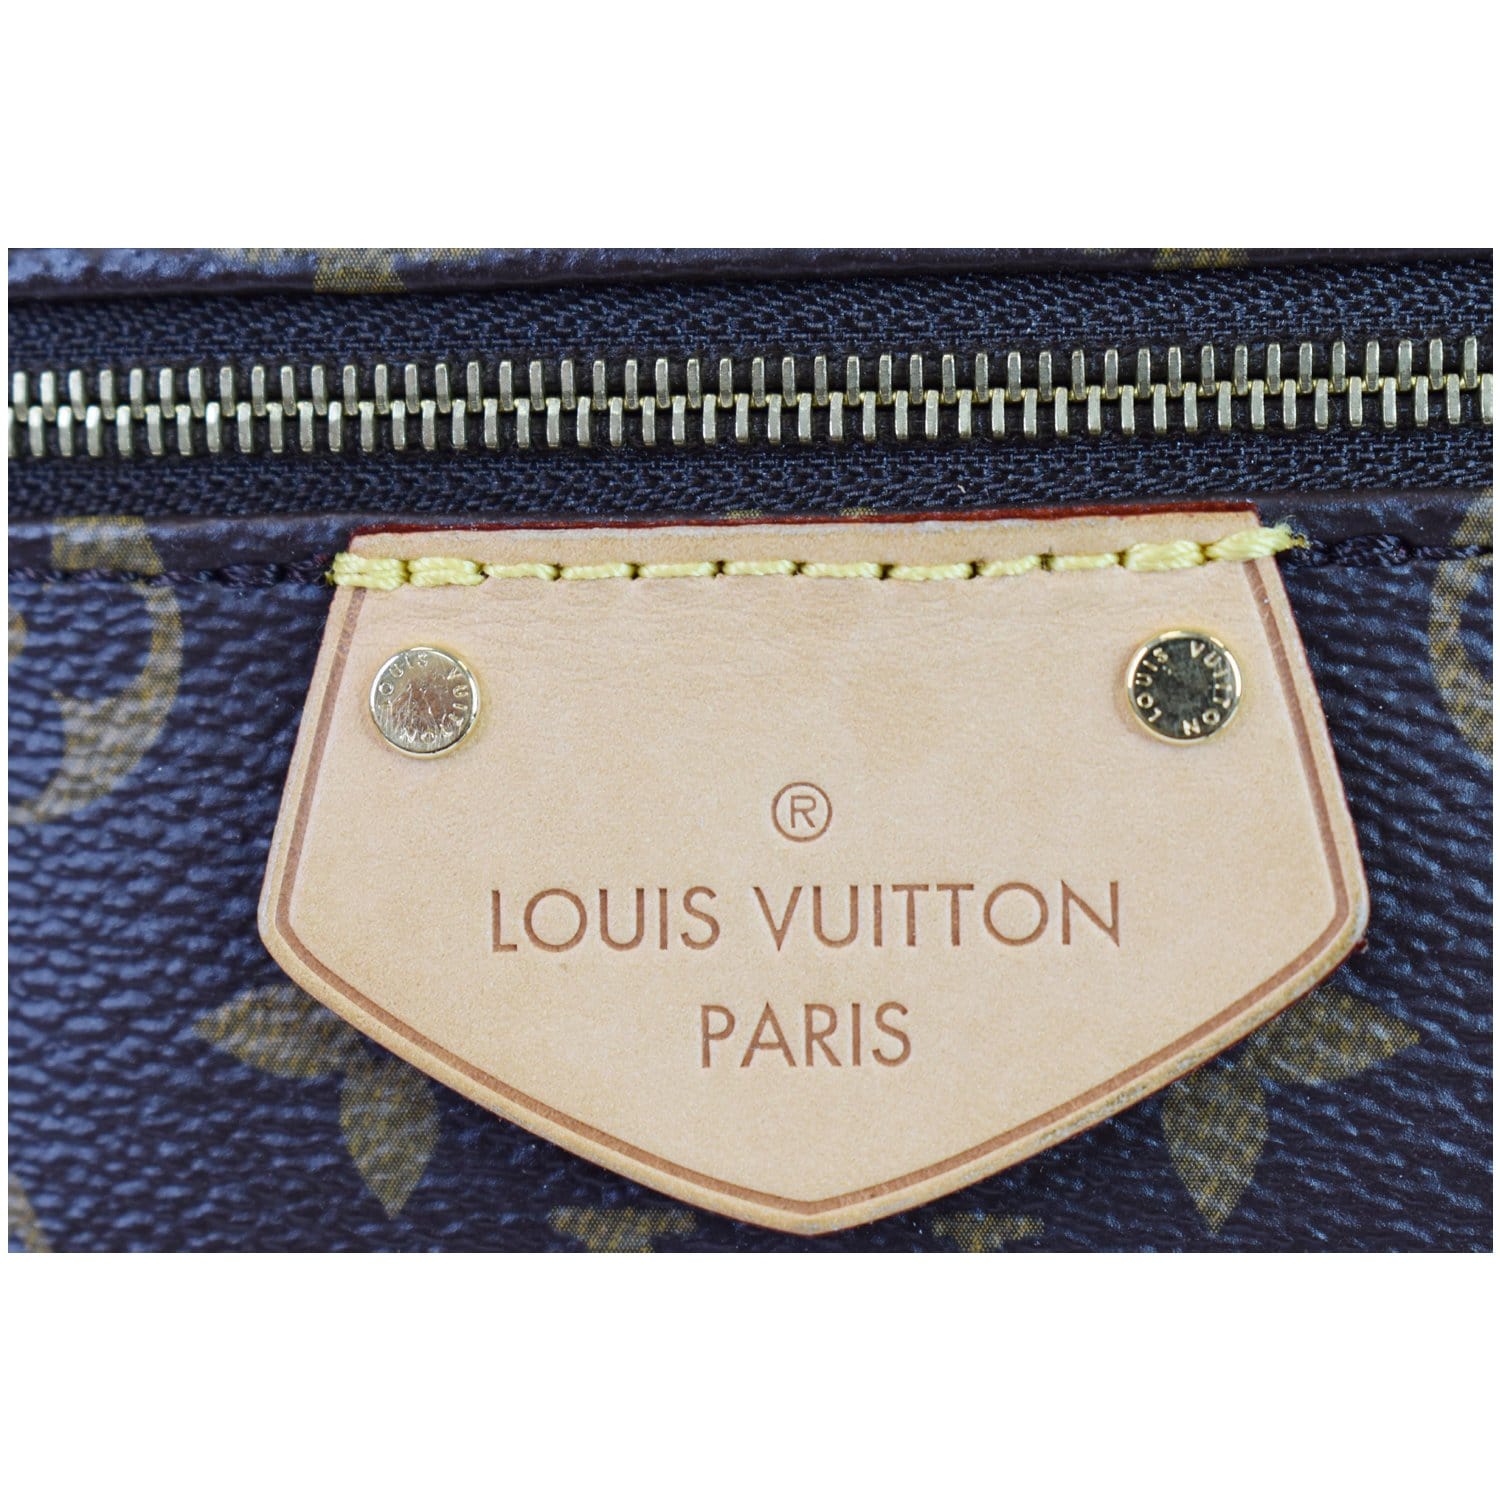 Louis Vuitton inventpdr MaieaniaDeeEn1854 malletra Paris for sale